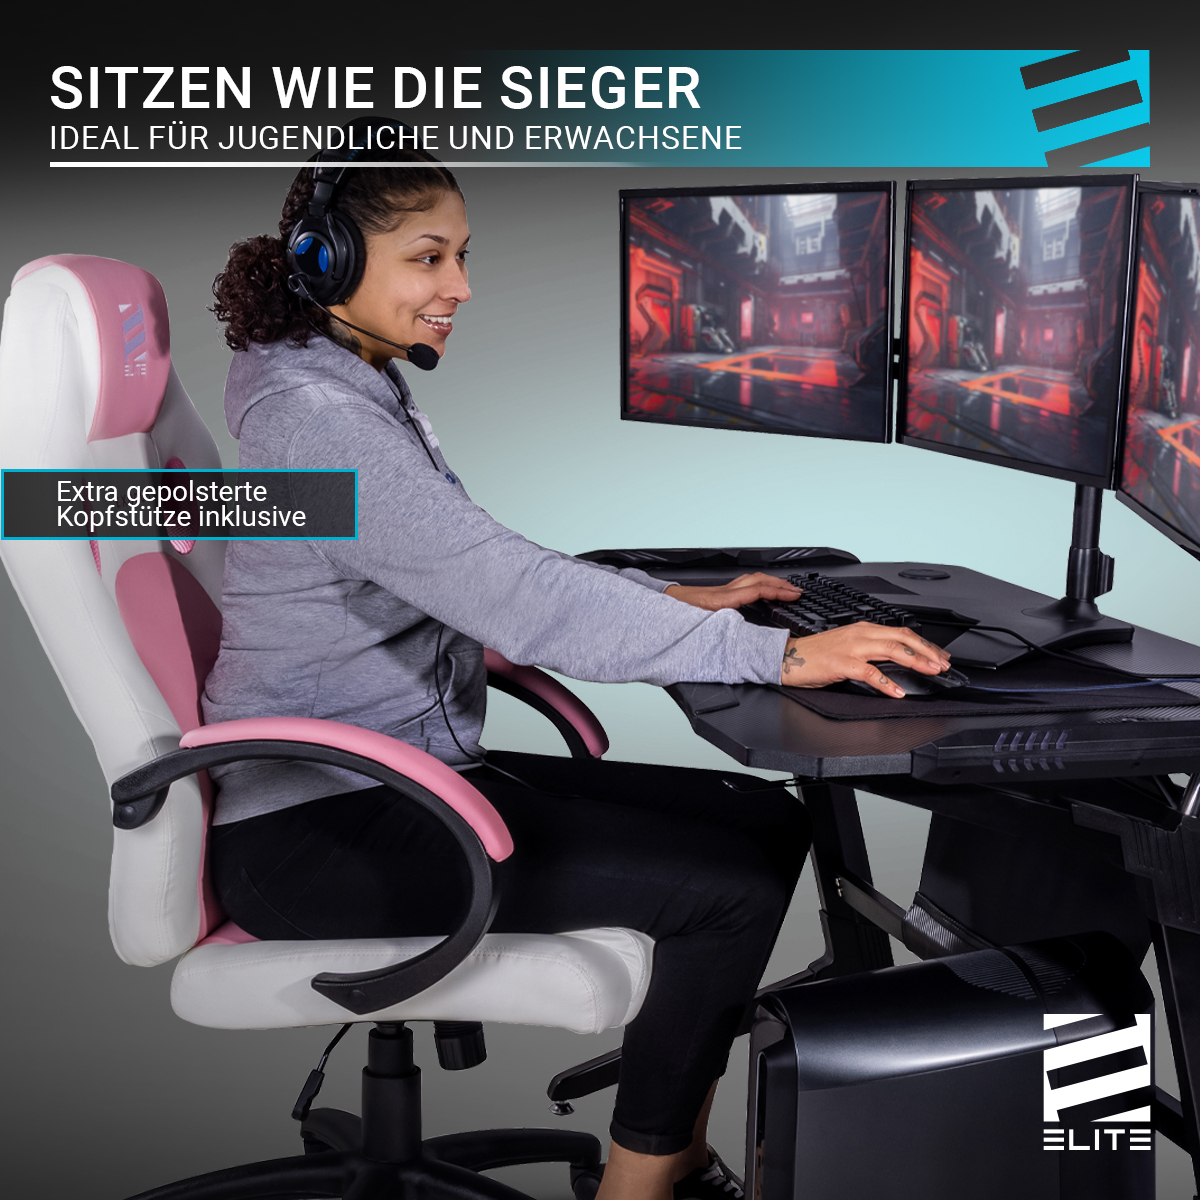 ELITE EXODUS, Memory-Schaum, extra Stuhl, Armpolster, Schwarz/Blau Rückenlehne, hohe Gaming MG100 Wippmechanik